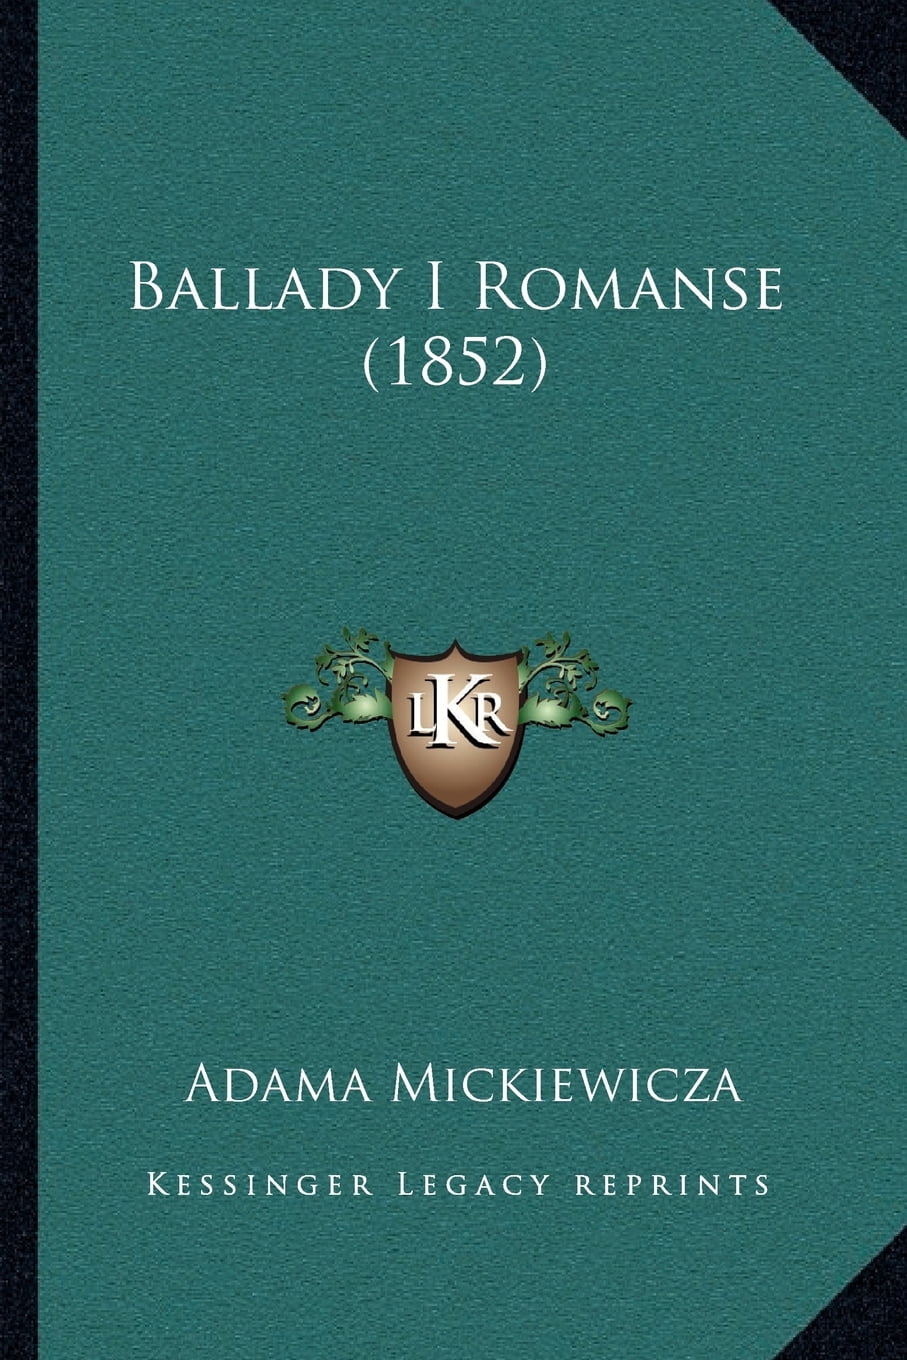 ballady-i-romanse-1852-paperback-walmart-walmart